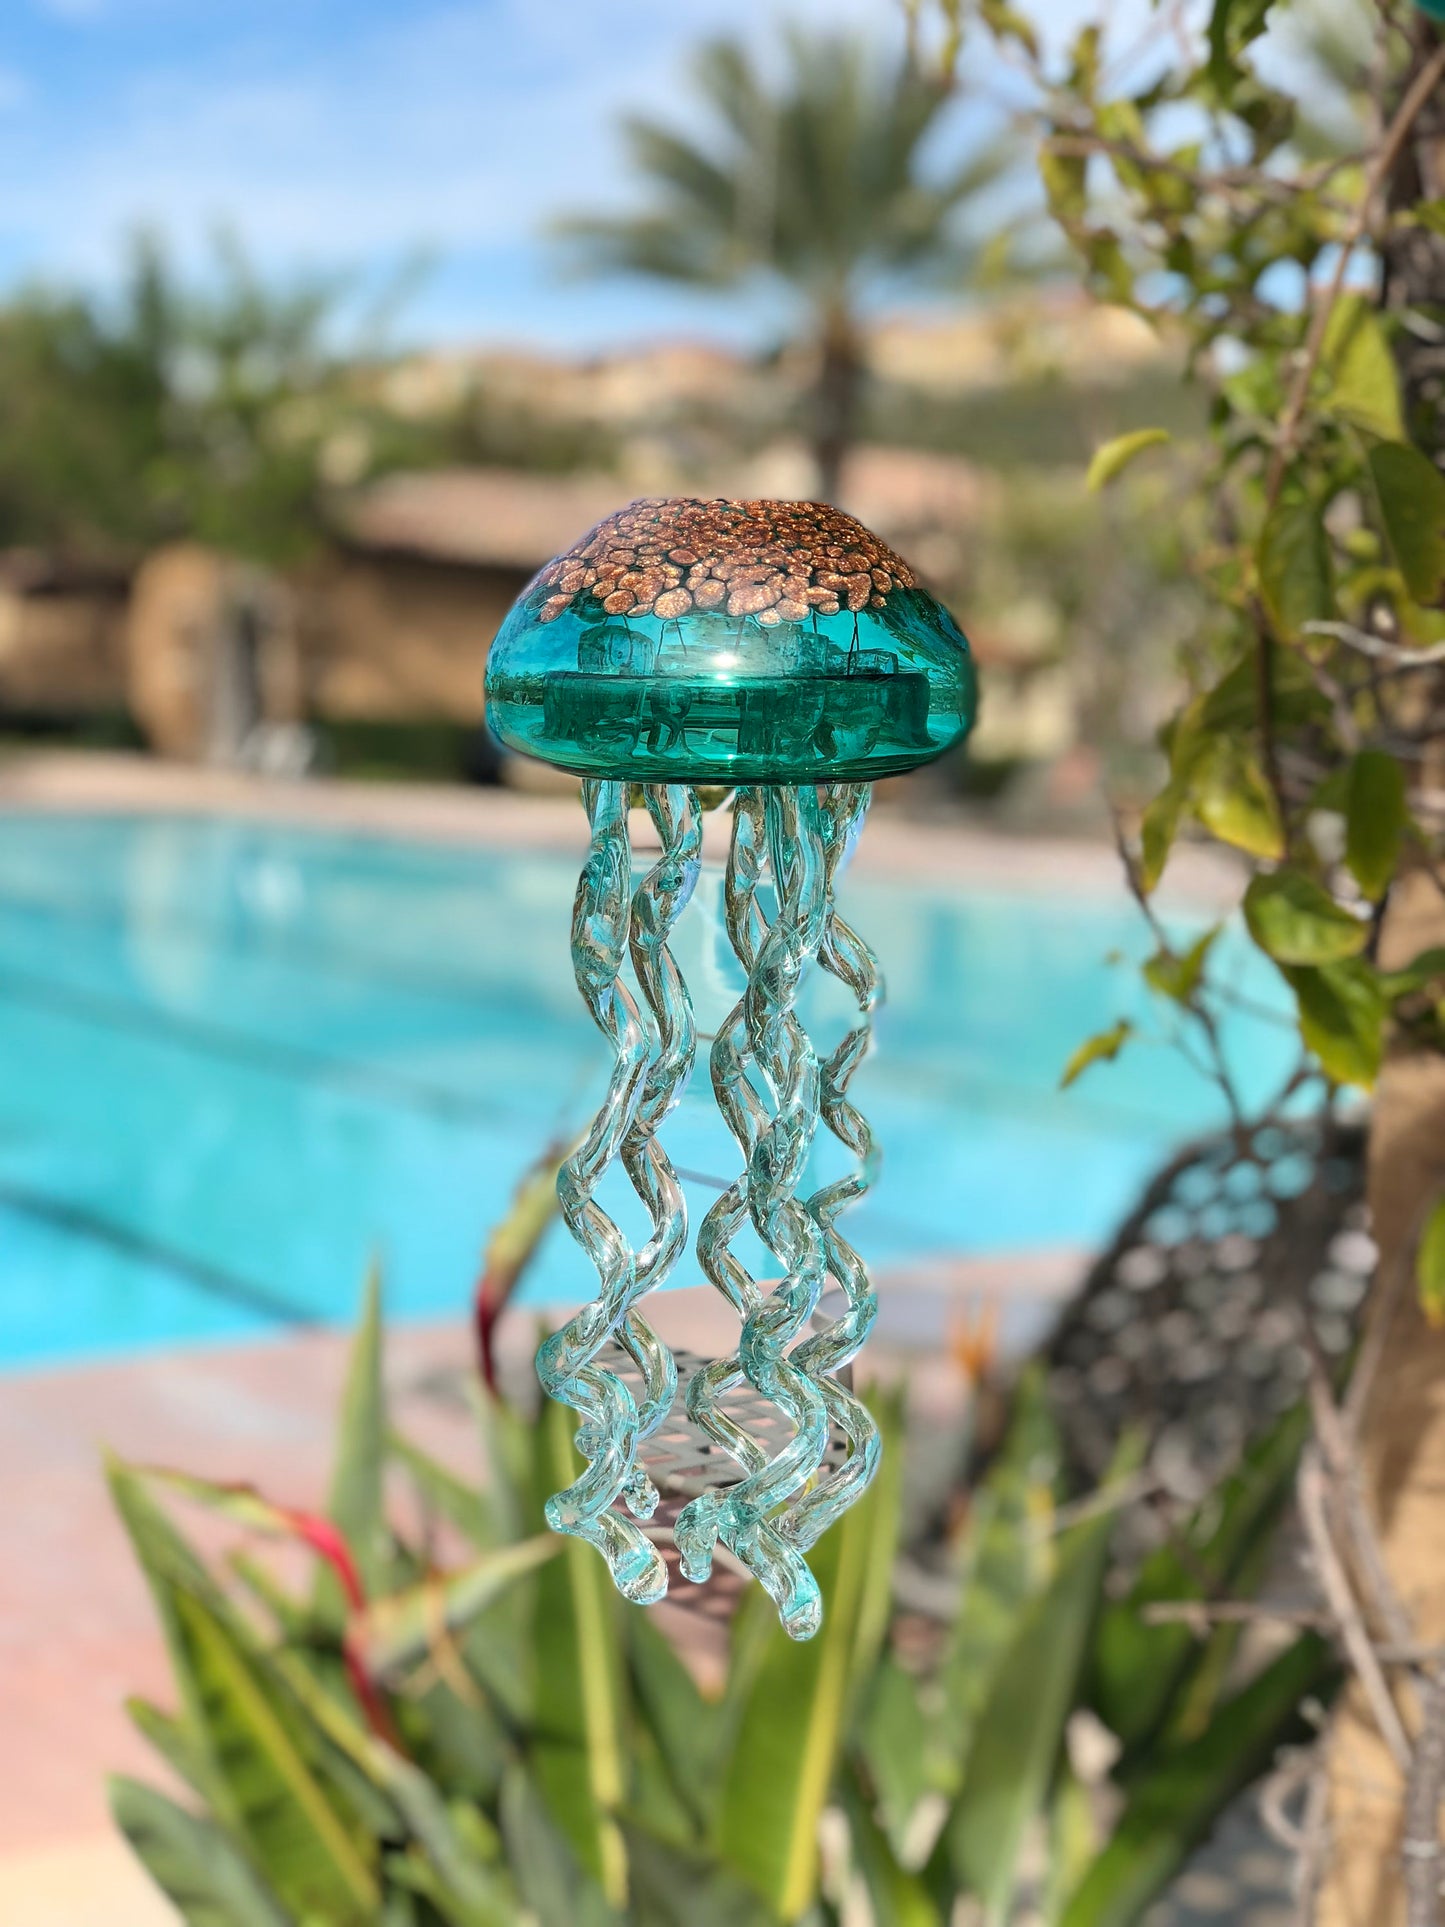 Free US Shipping~Handmade Art Glass Jellyfish Holiday Gift Hanging Decor Sun Catcher Wind Chimes